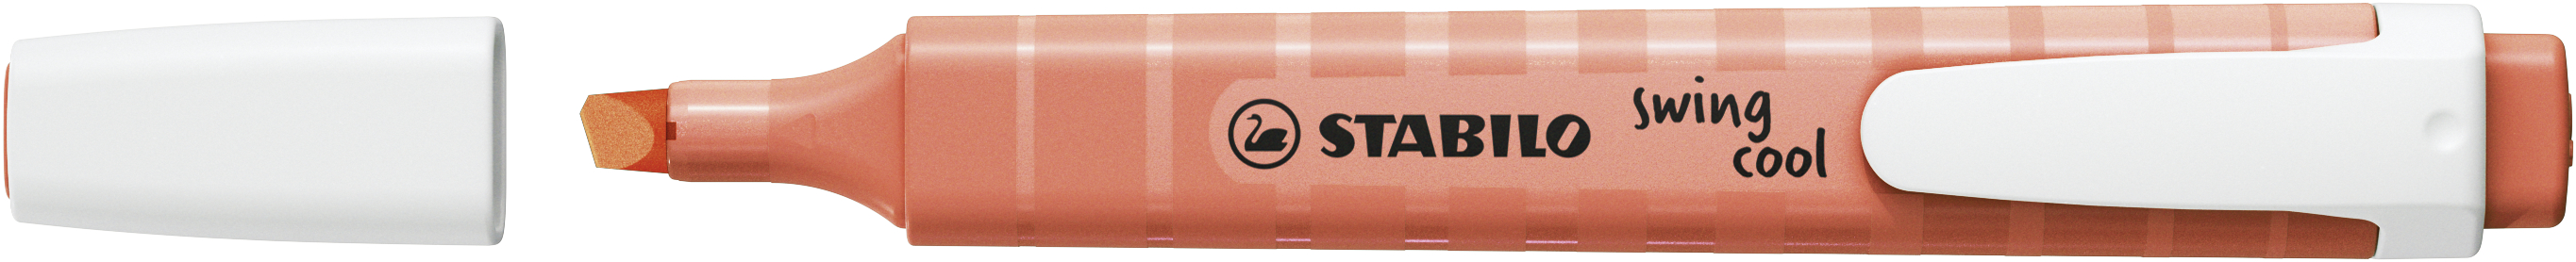 STABILO Textmarker Swing Cool 1-4mm 275/140-8 rouge corail pastel